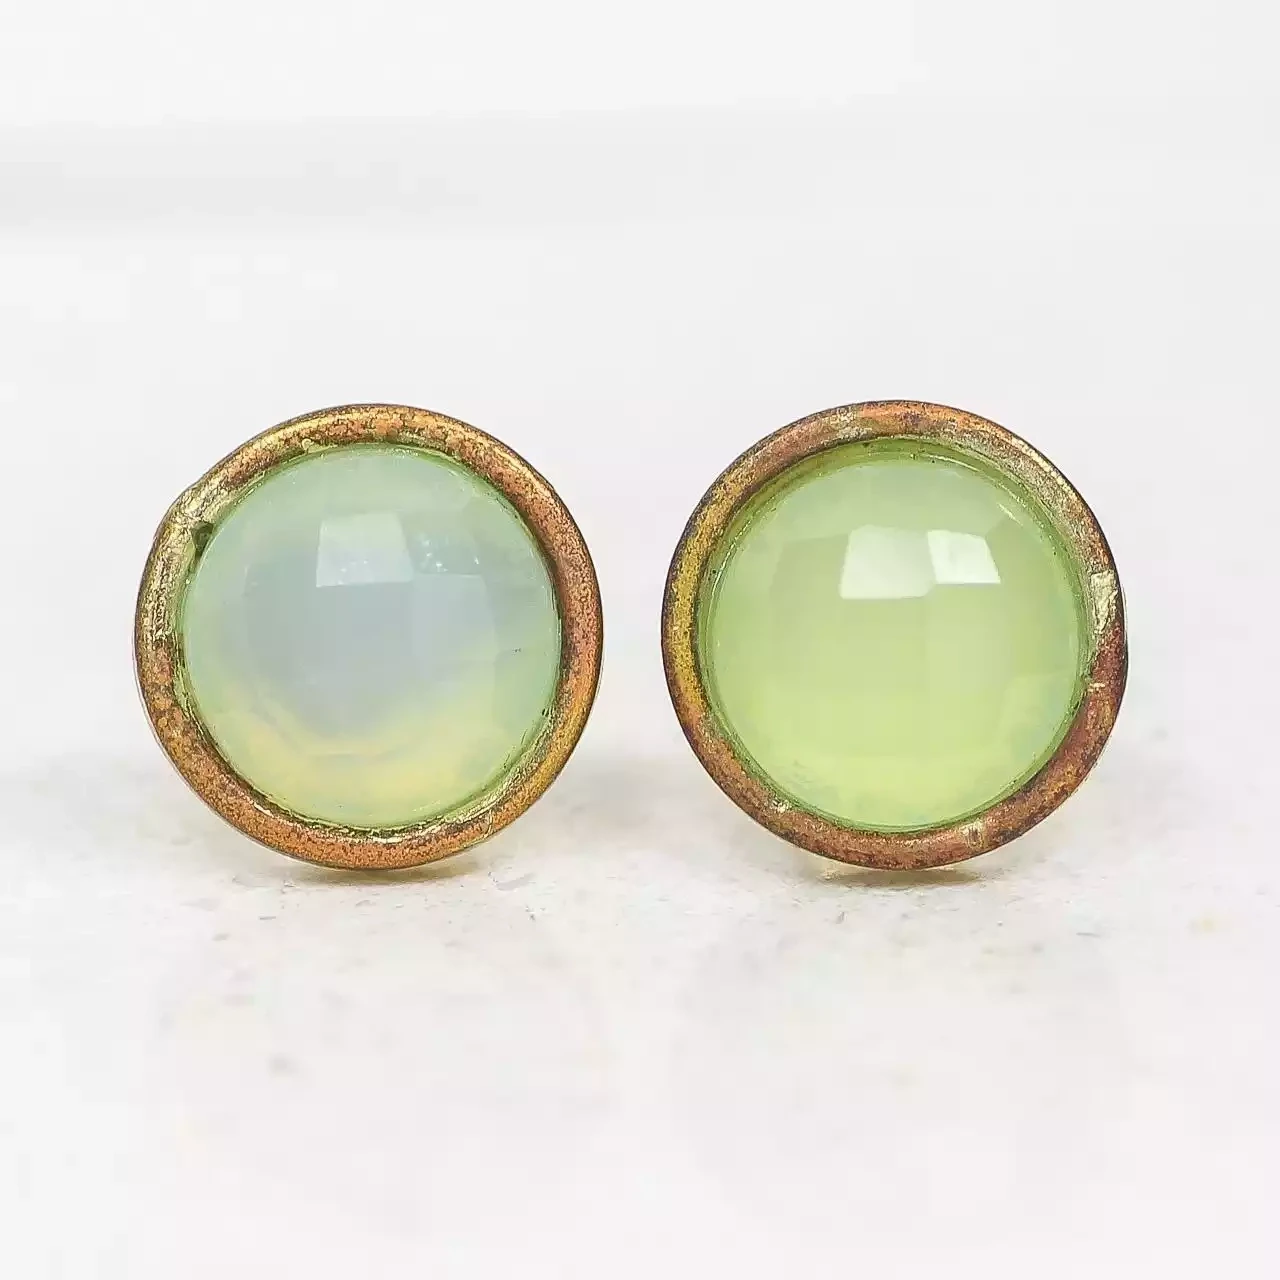 Gemstone Stud Earrings - Agate by Shared Earth